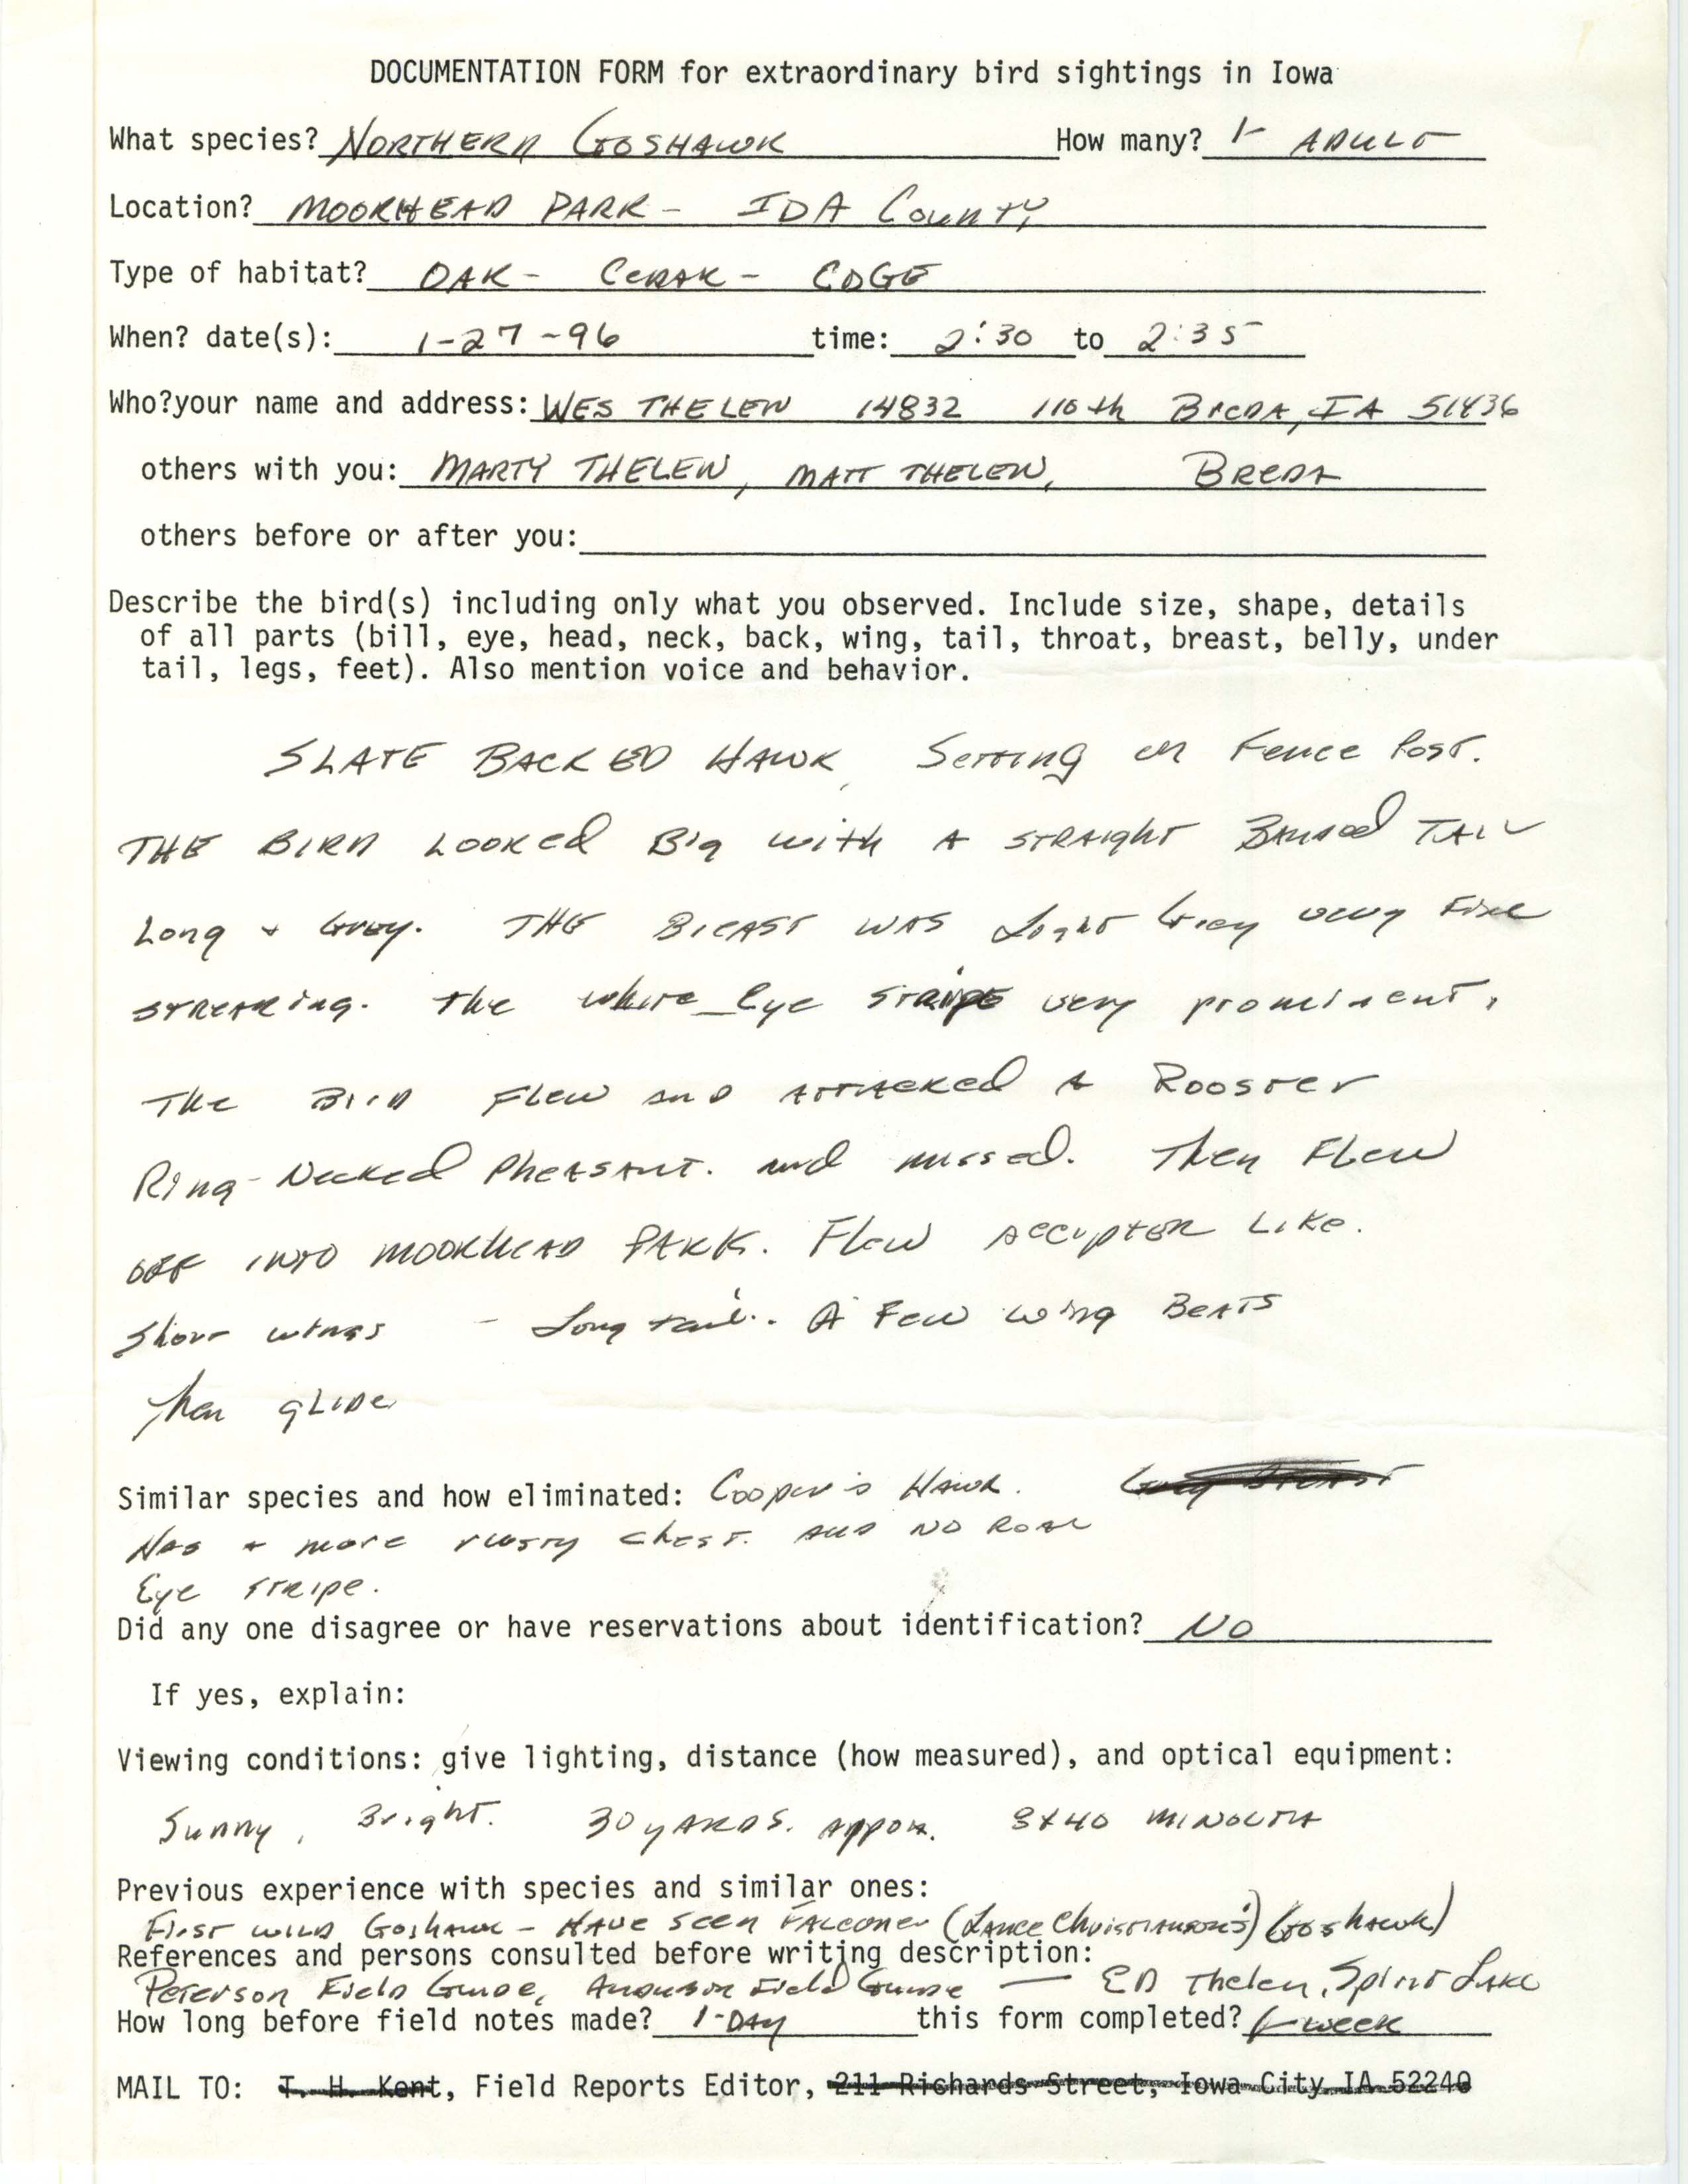 Rare bird documentation form for Northern Goshawk at Moorehead Park, 1996